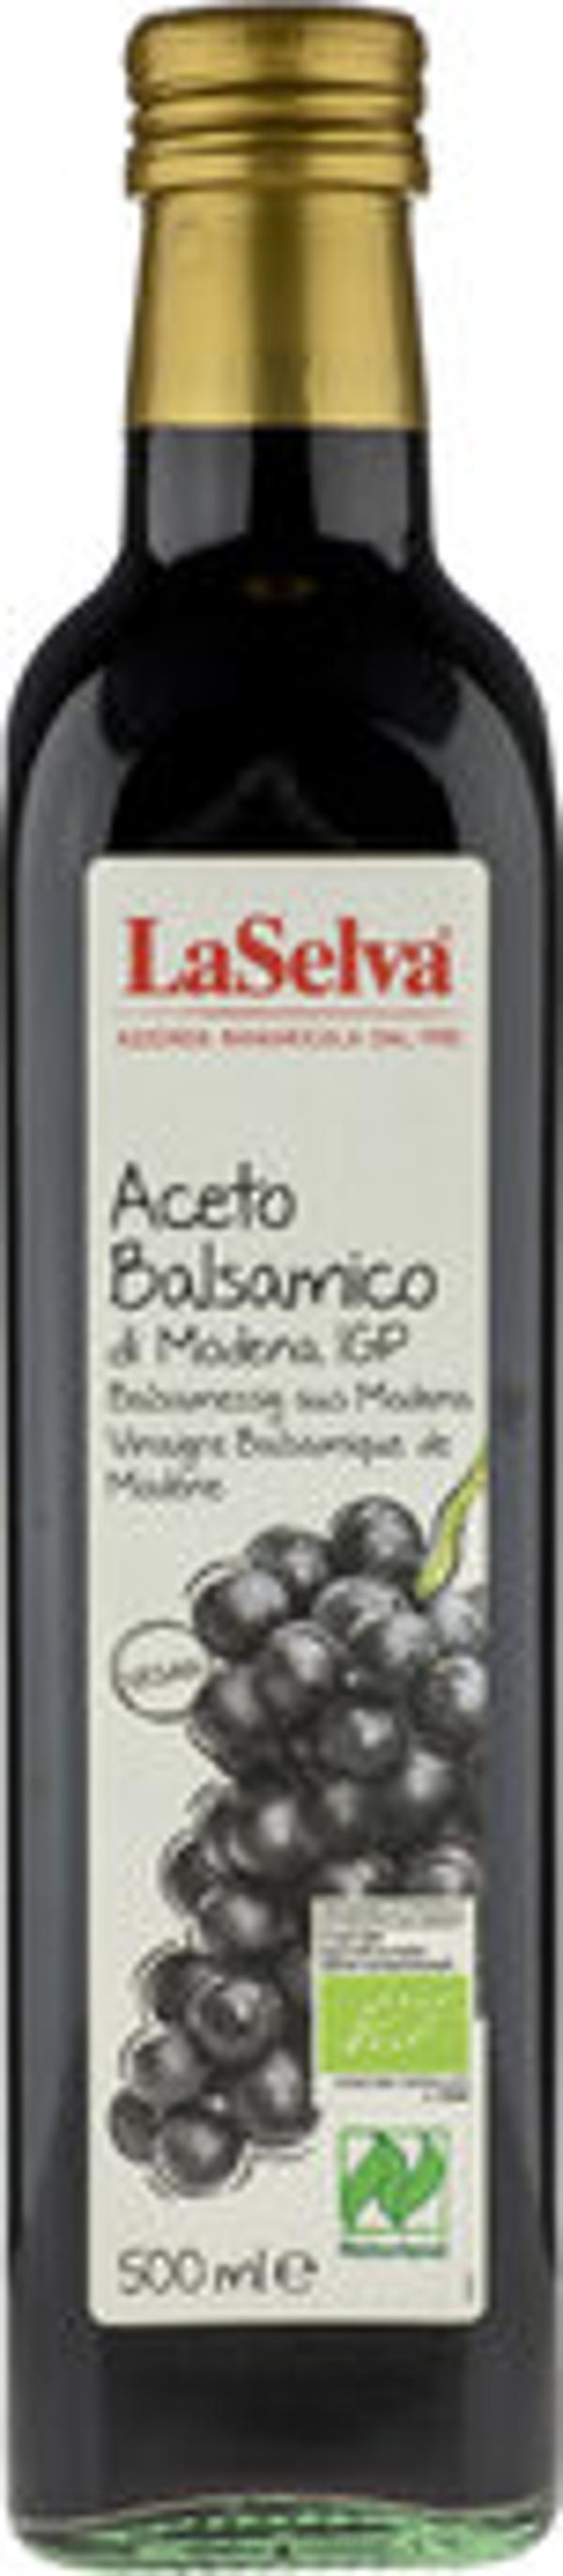 Produktfoto zu Aceto Balsamico 0,5 l (SEL)